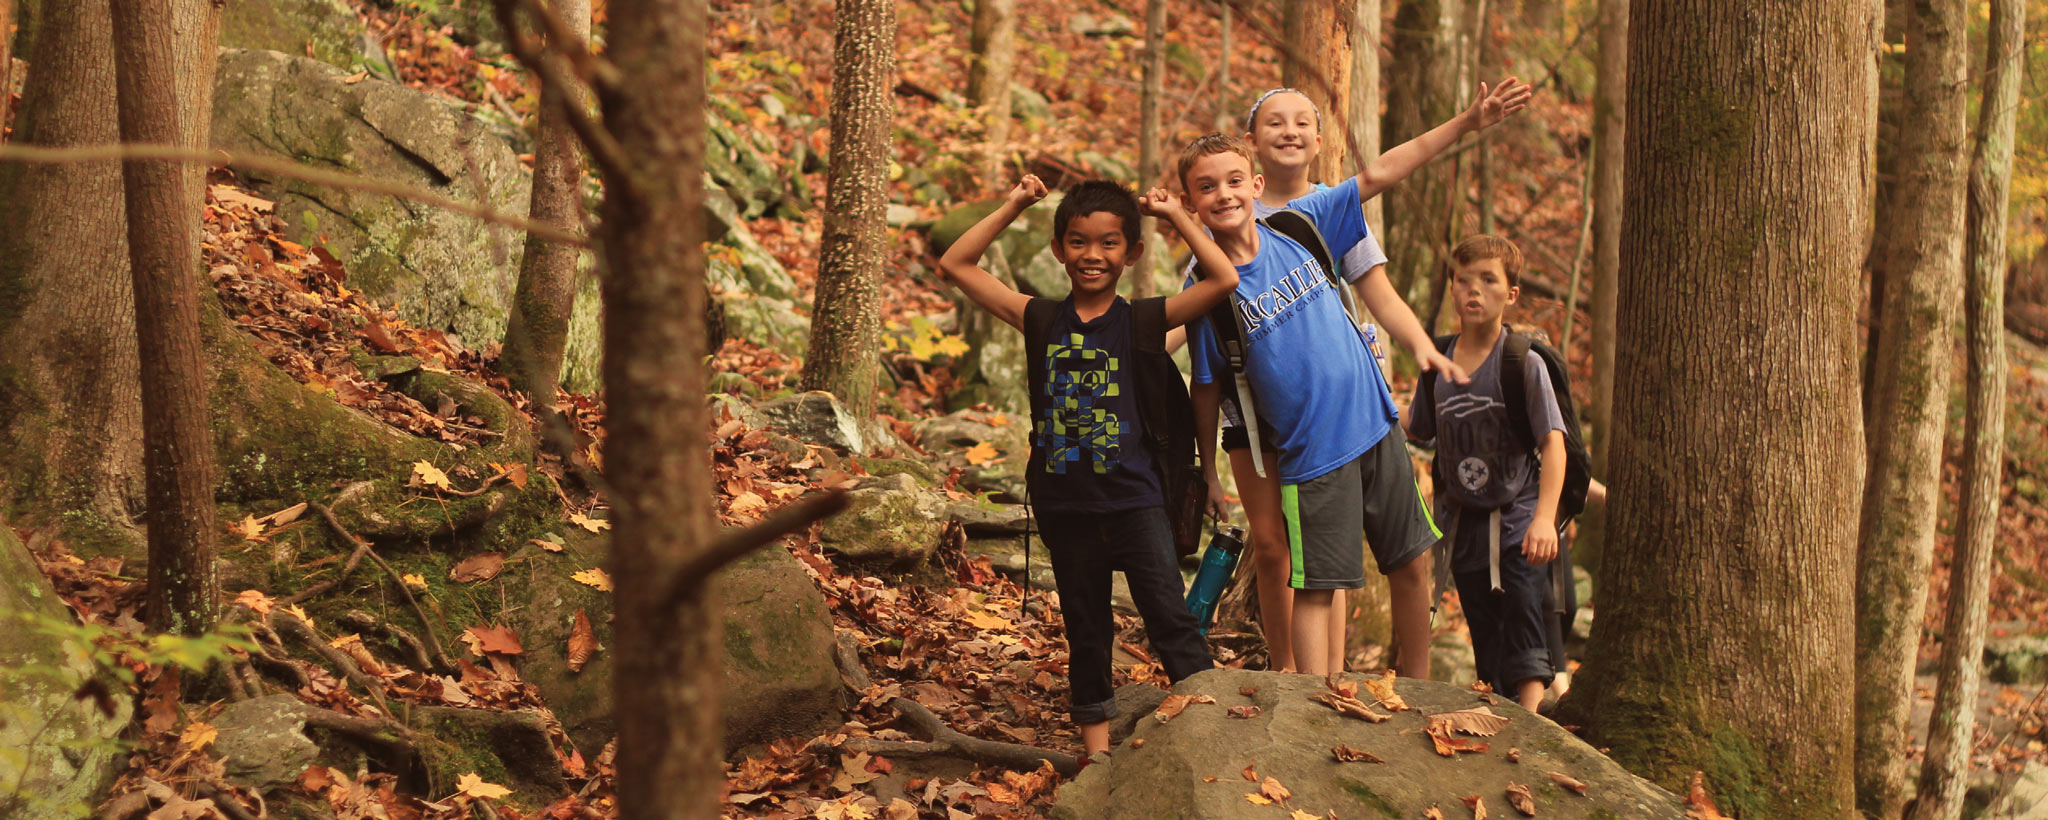 Kids Trekking in Smoky Mountains National Park